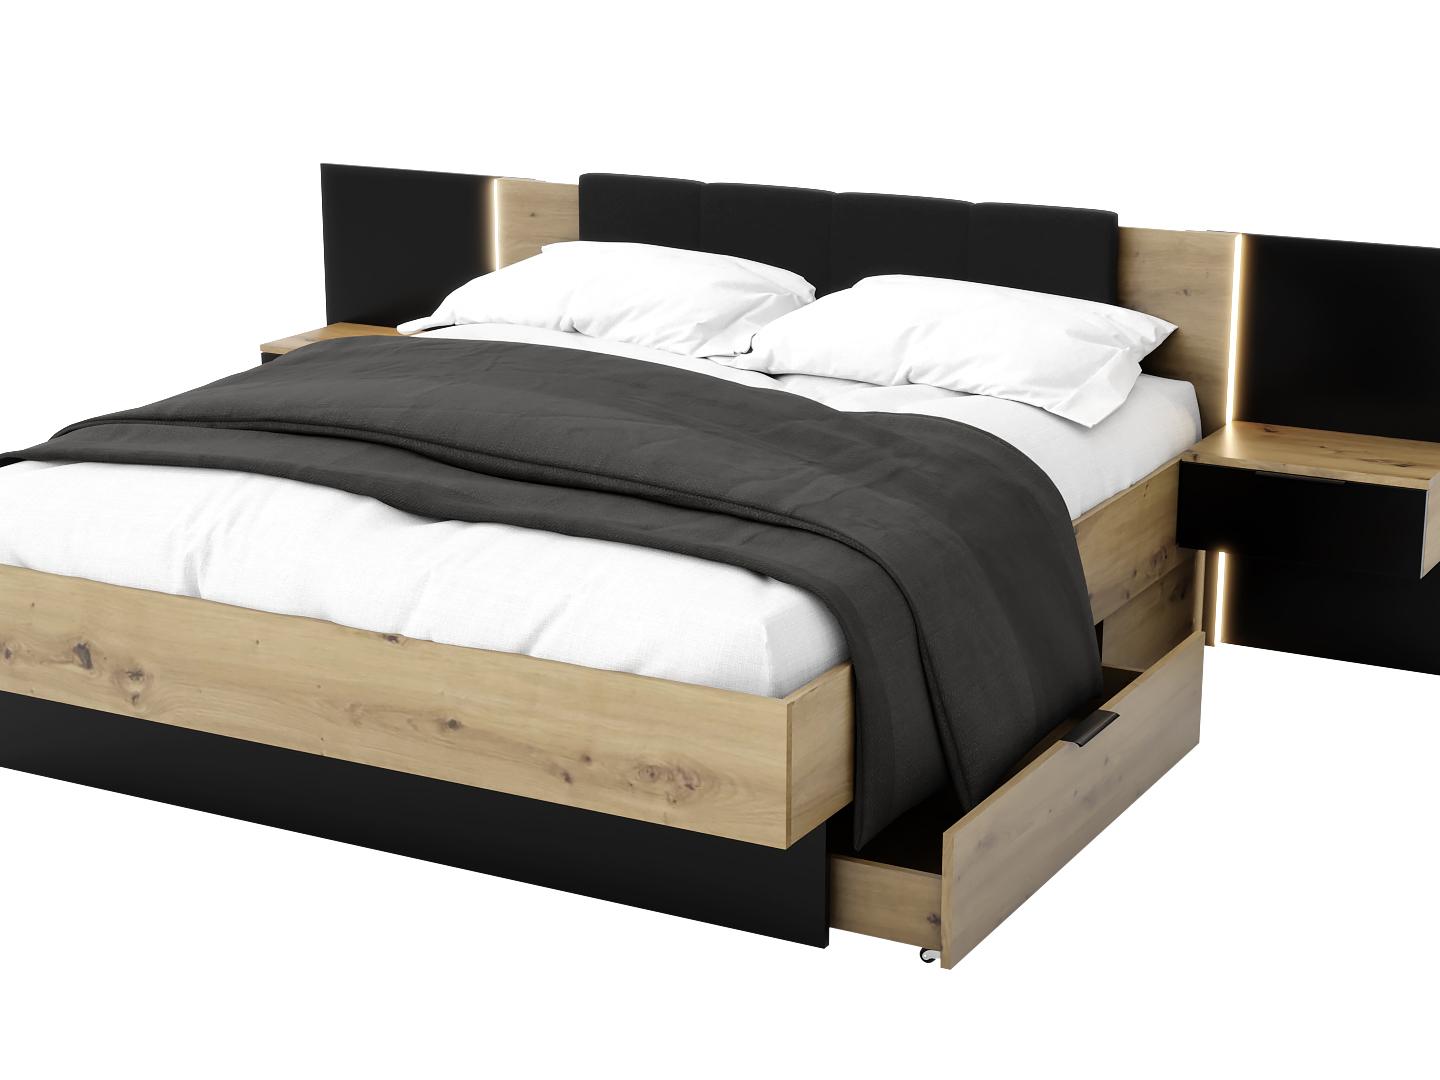 Manželská postel 180 cm Lewell (s čelním rámem) (dub artisan + černá)